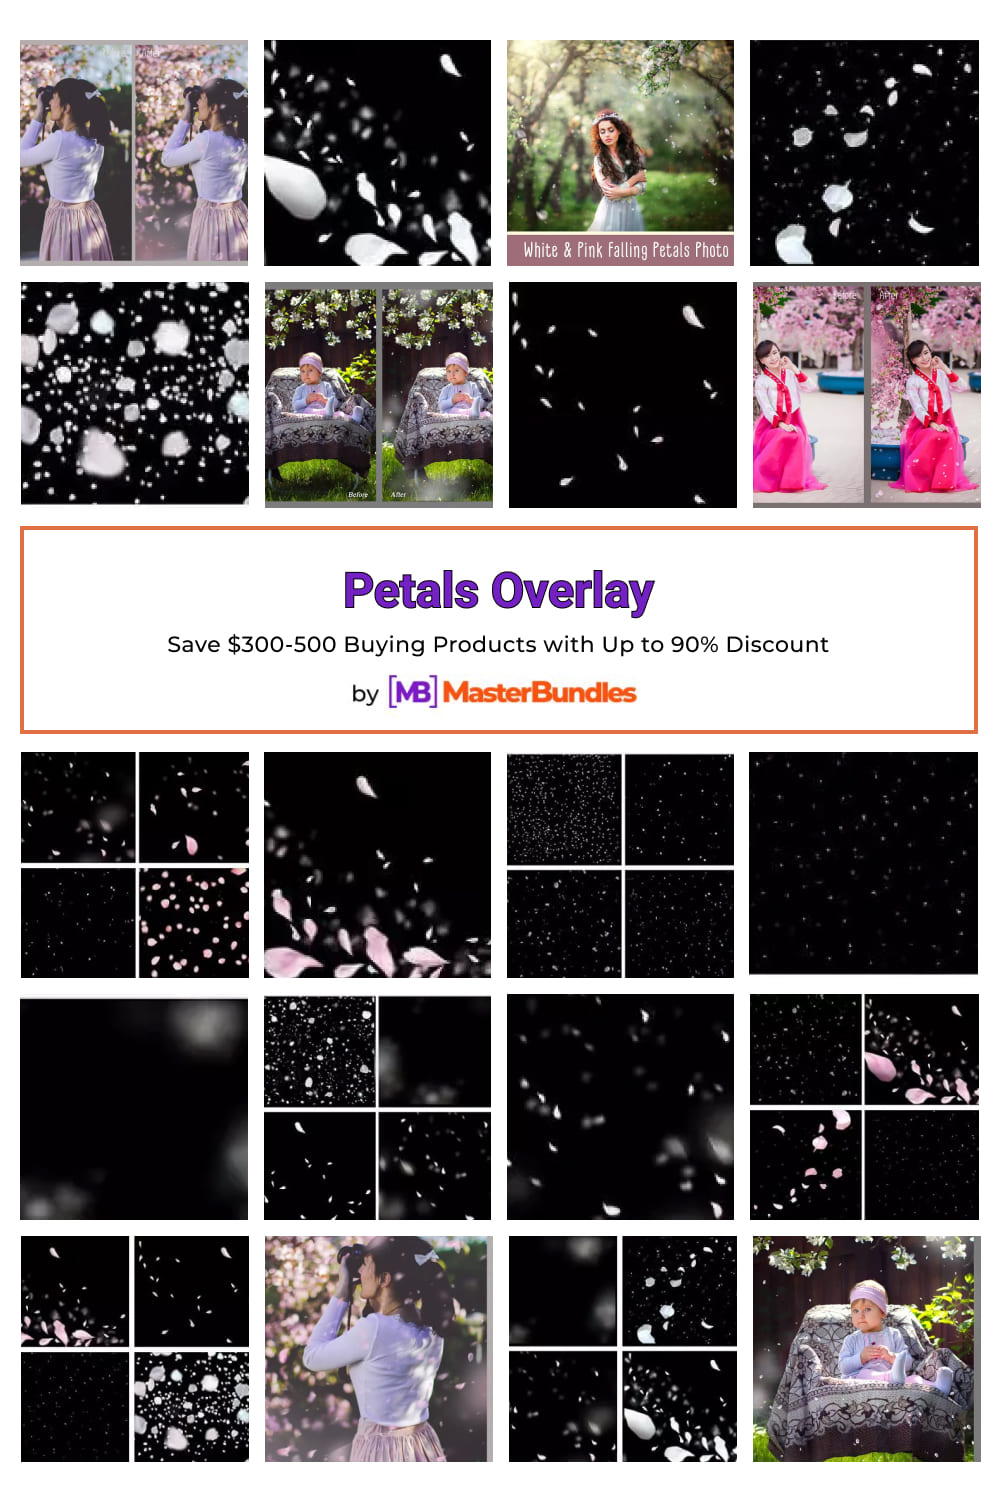 Petals Overlay Pinterest image.